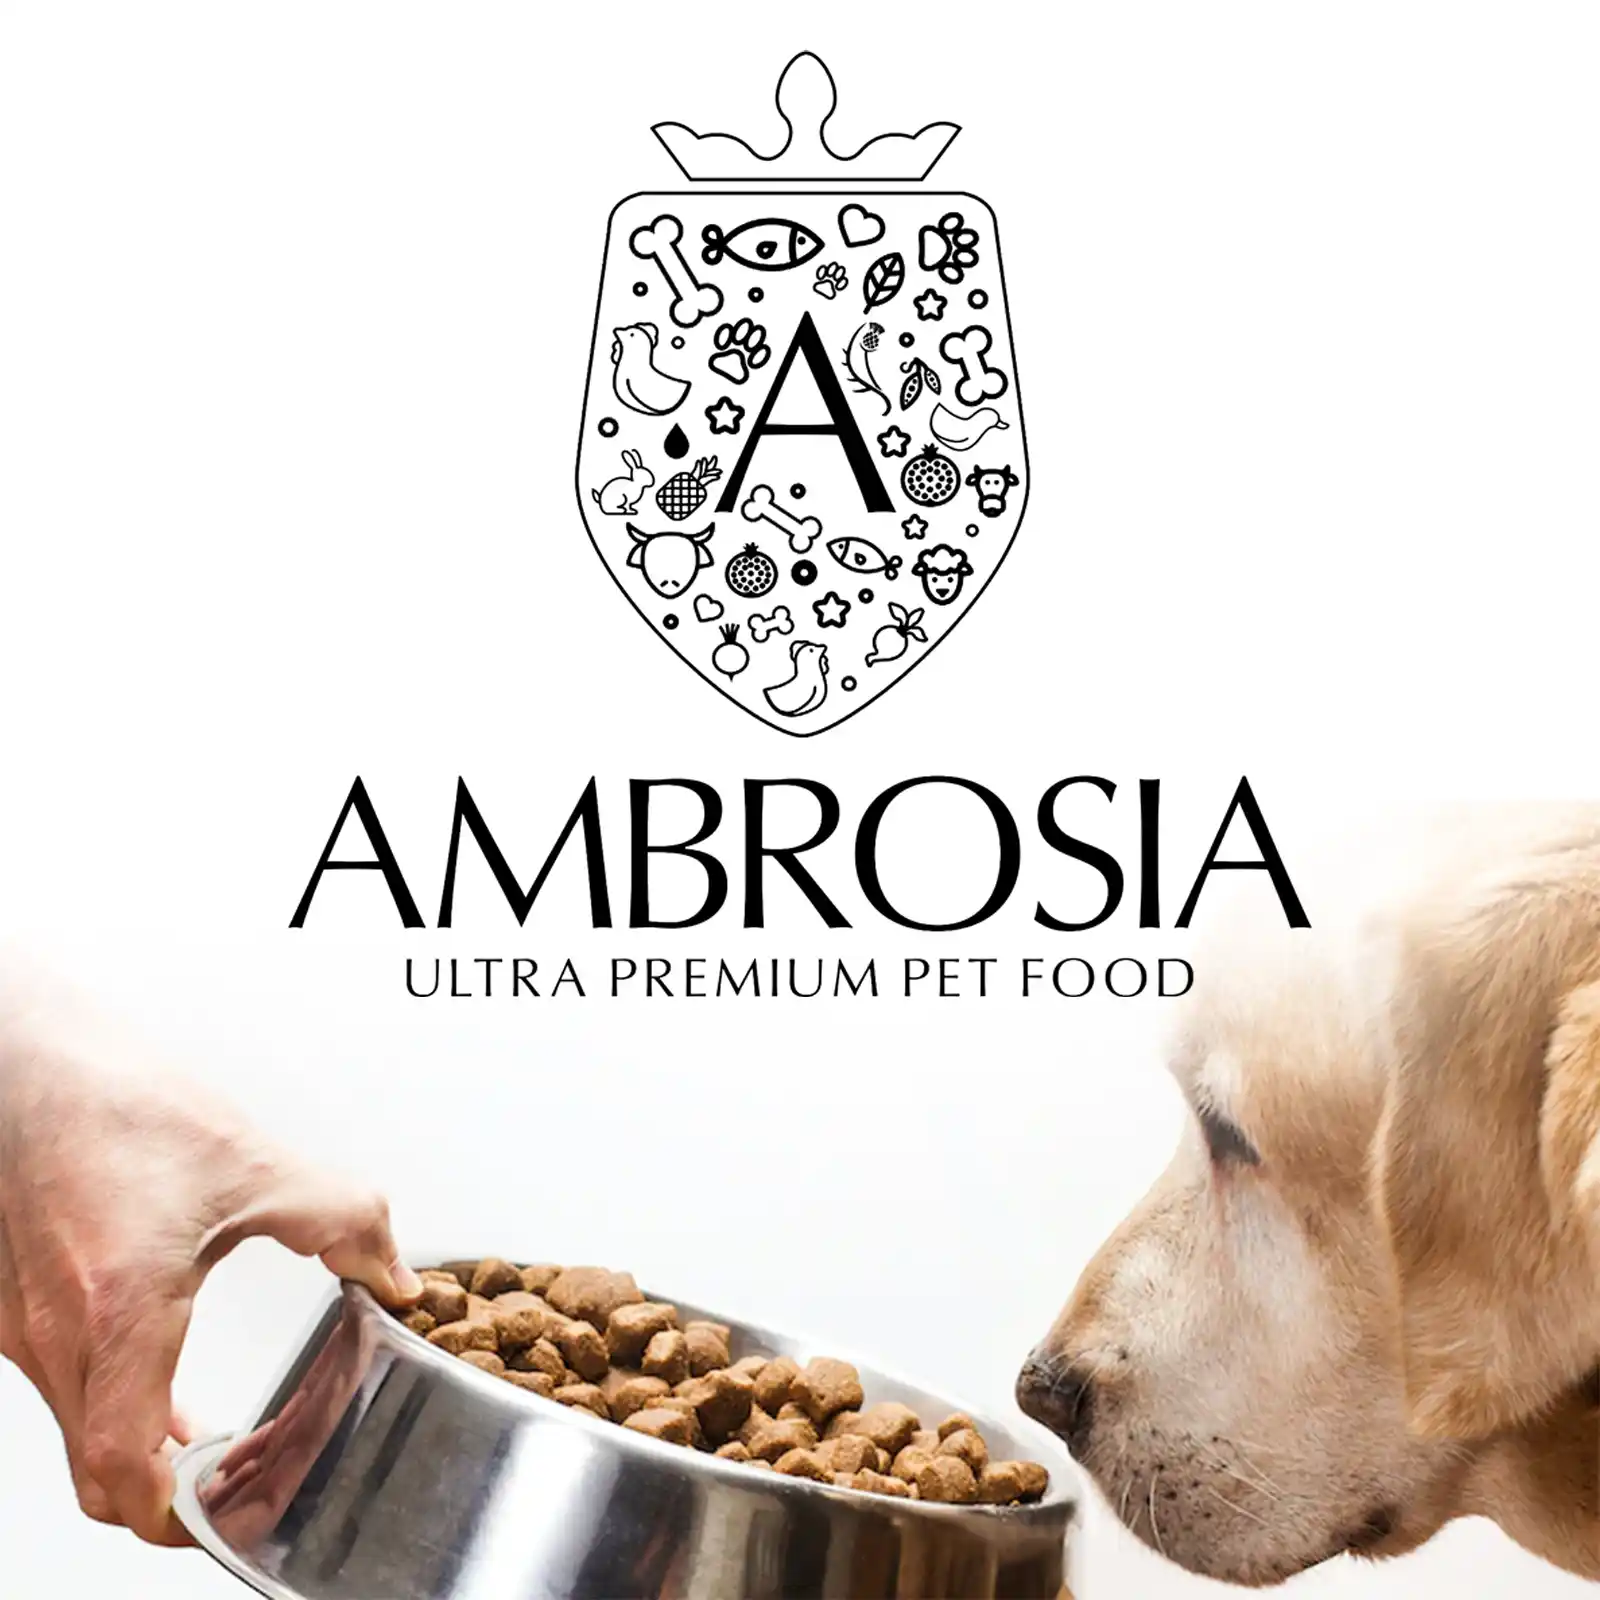 Ambrosia logo featuring a hand holding a bowl and feeding a Labrador Retriever.